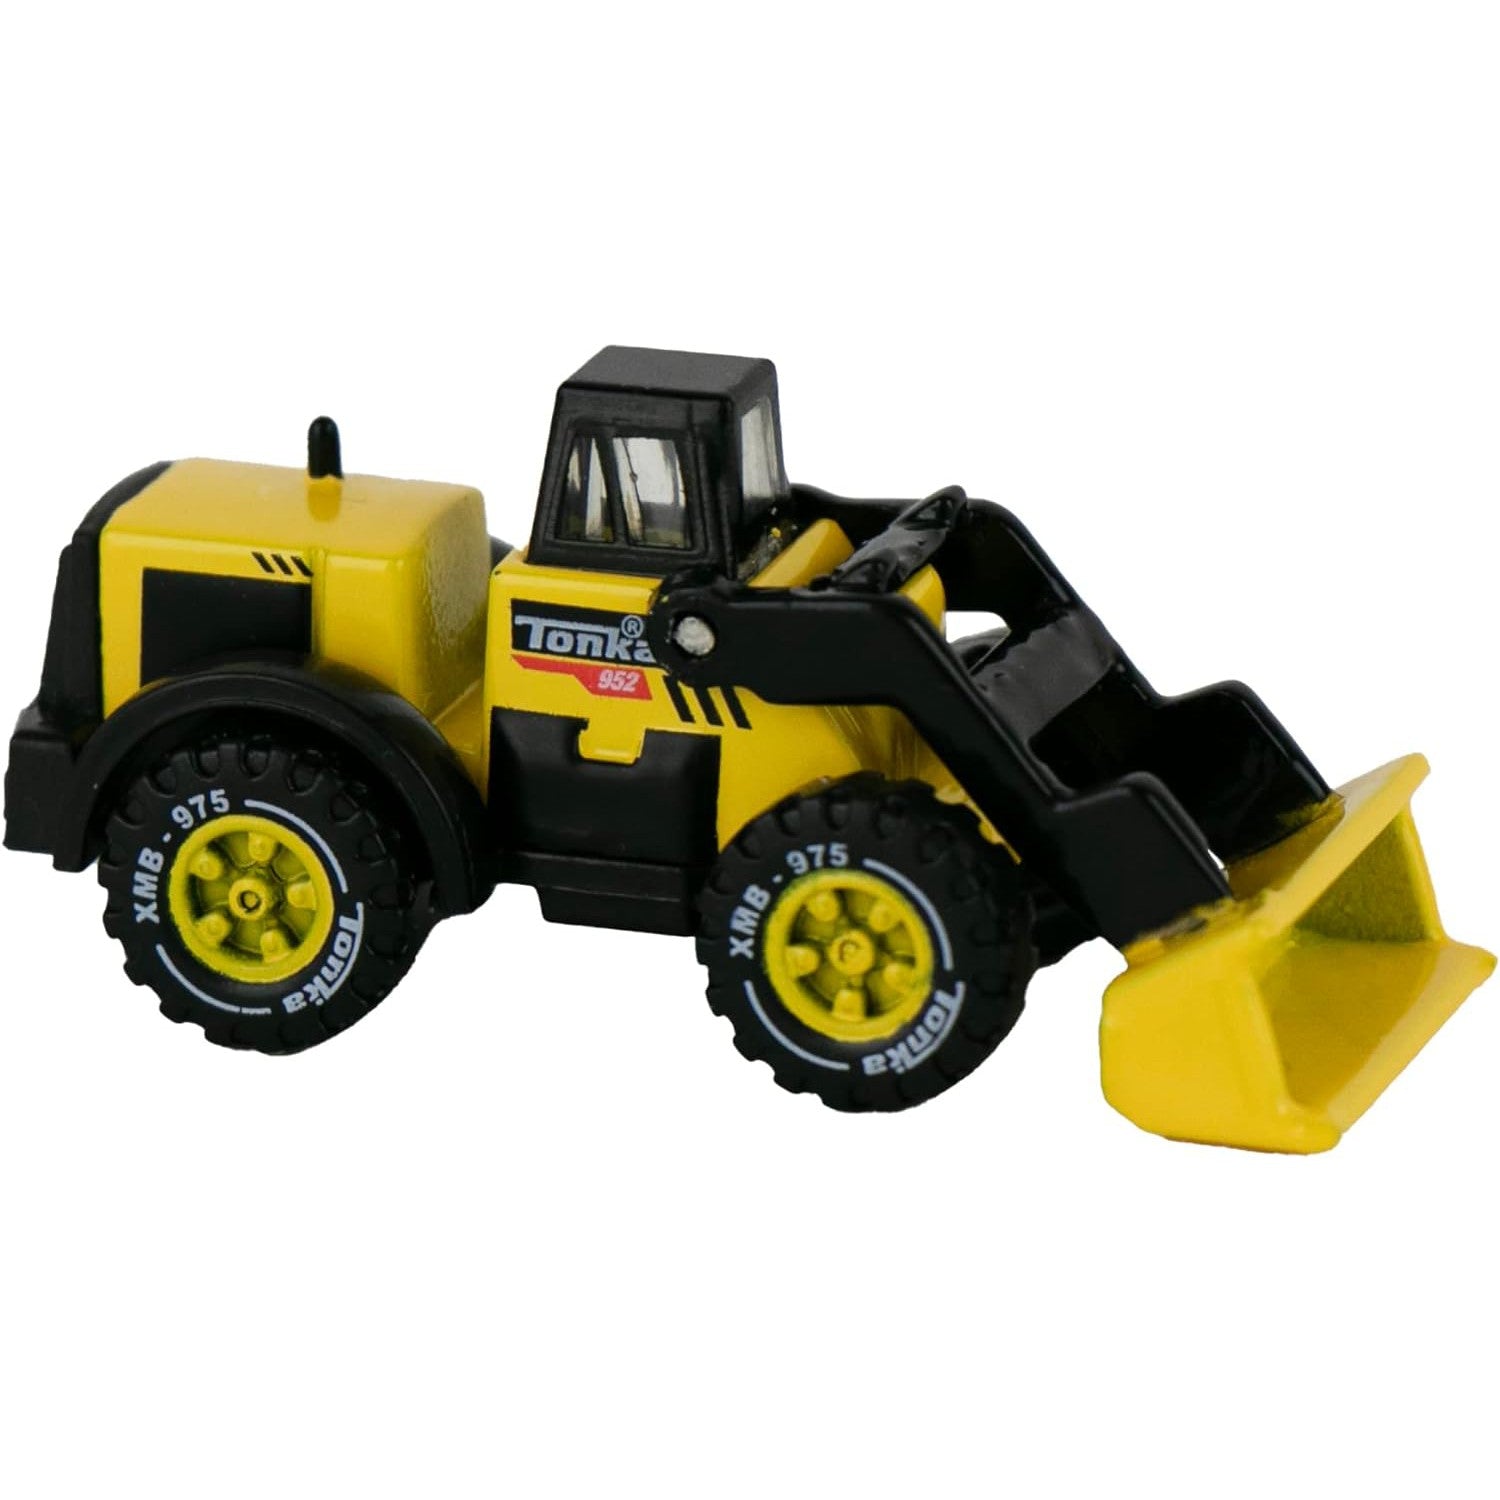 World's Smallest - Tonka Front Loader-Vehicles & Transportation-Super Impulse-Yellow Springs Toy Company